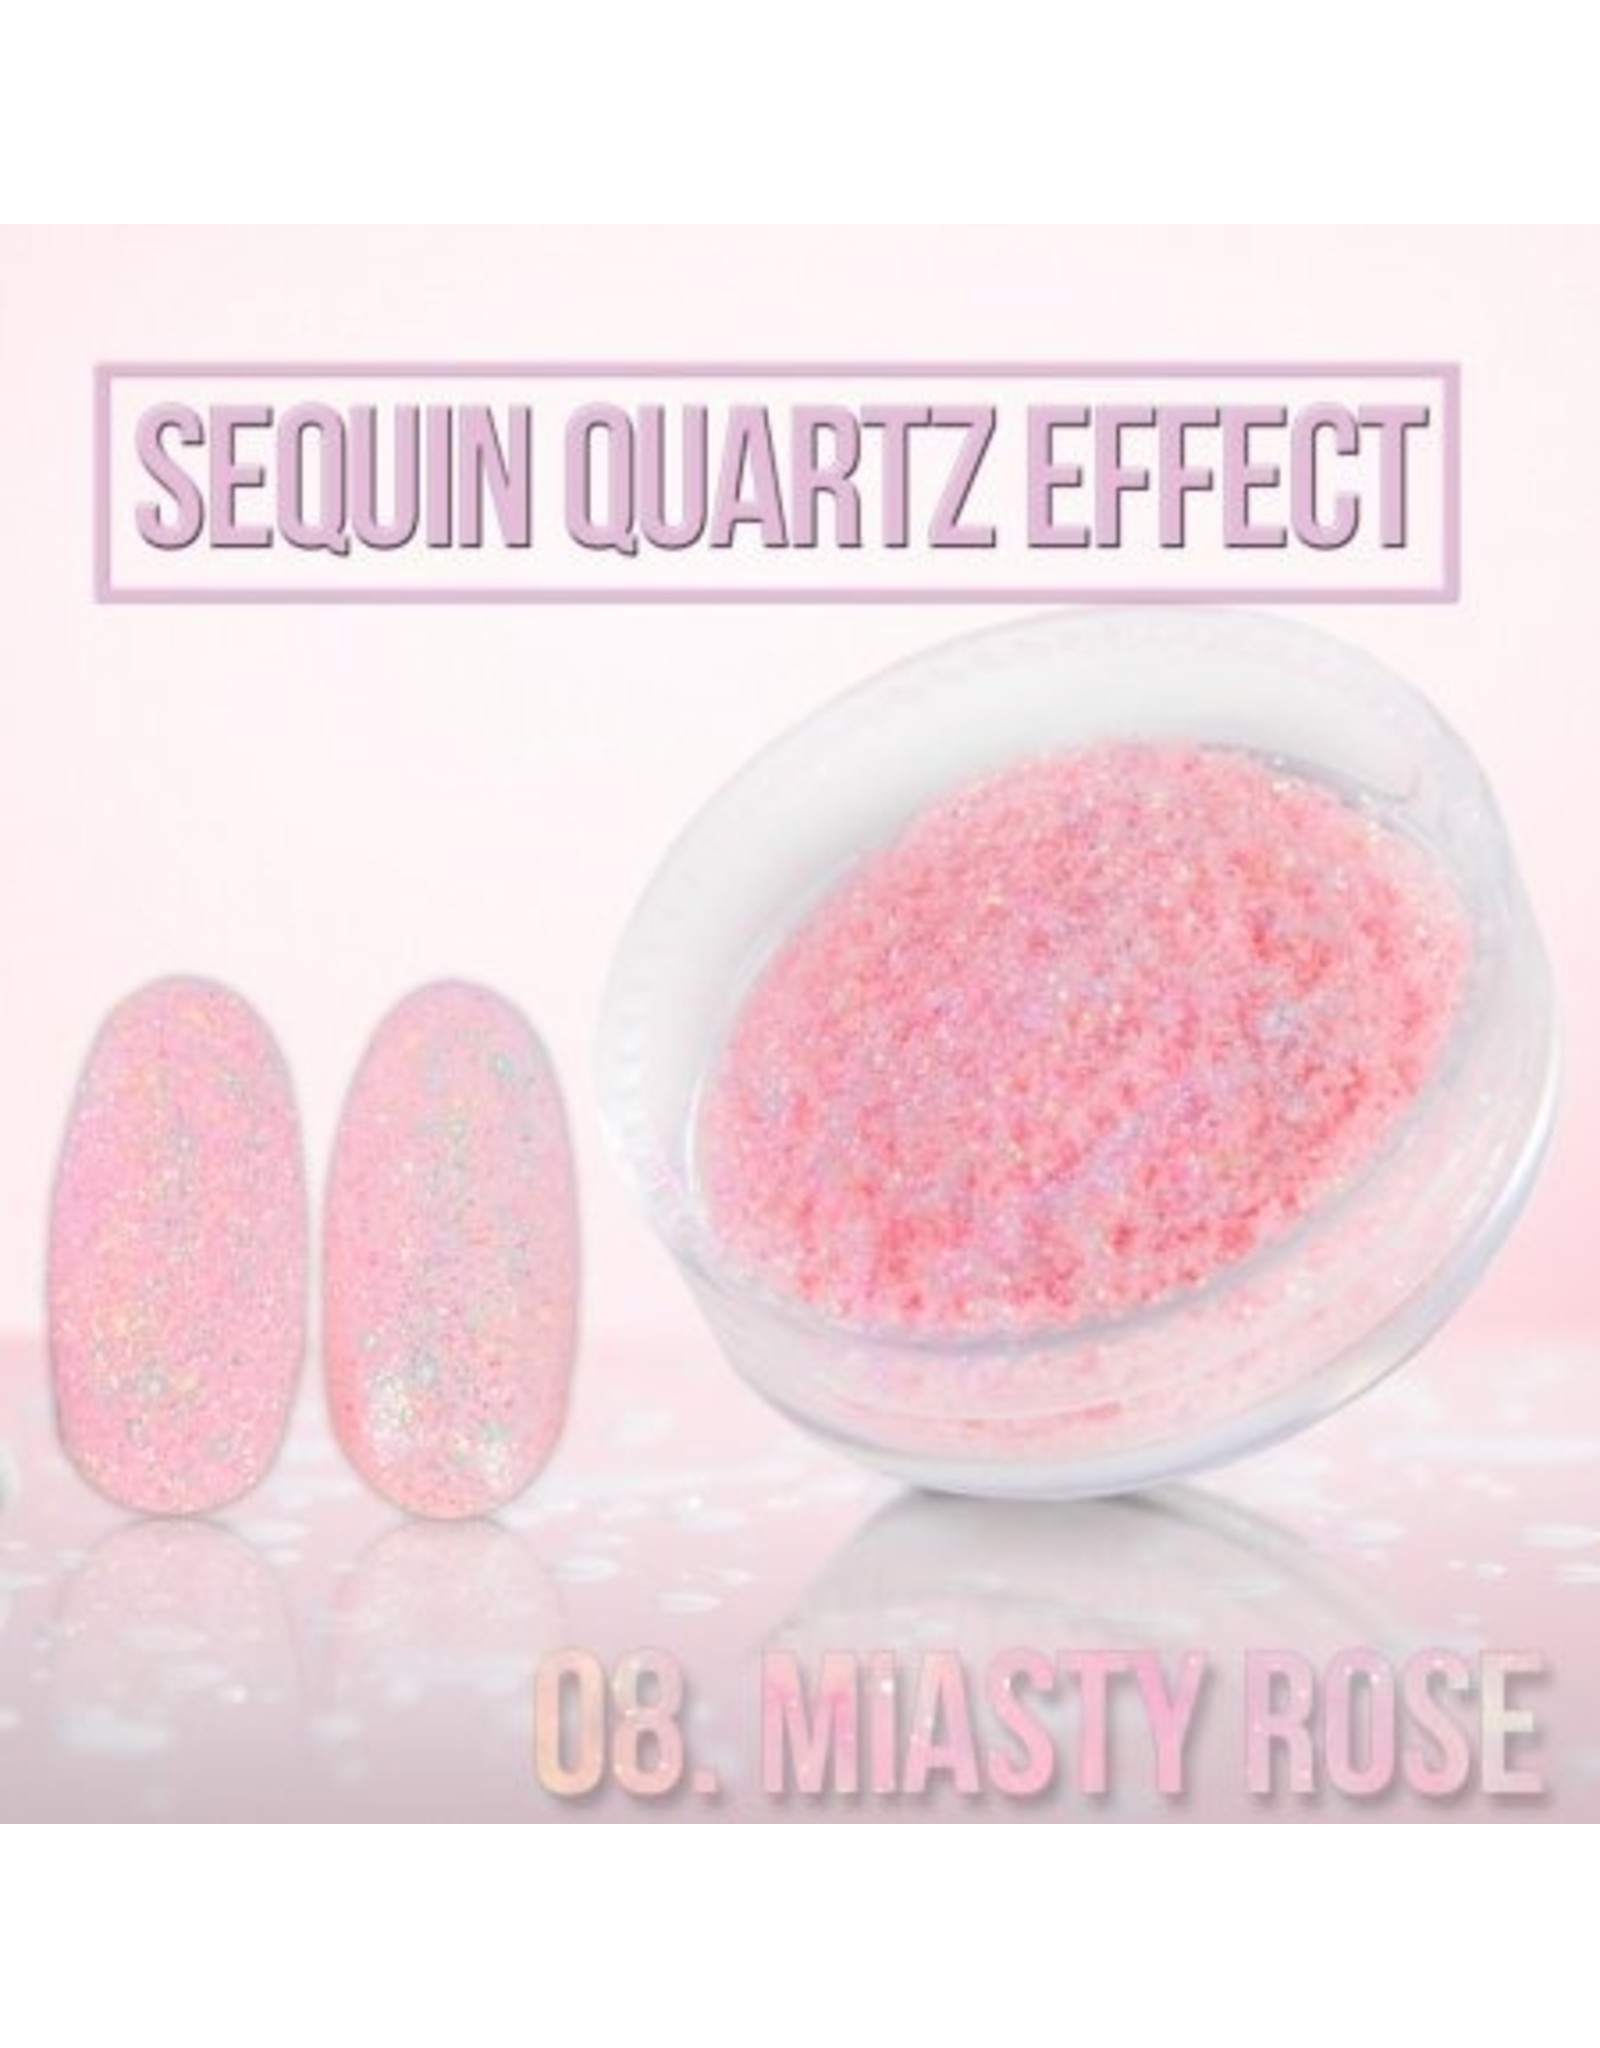 Merkloos Seaquin Quarts effect - Masty Rose